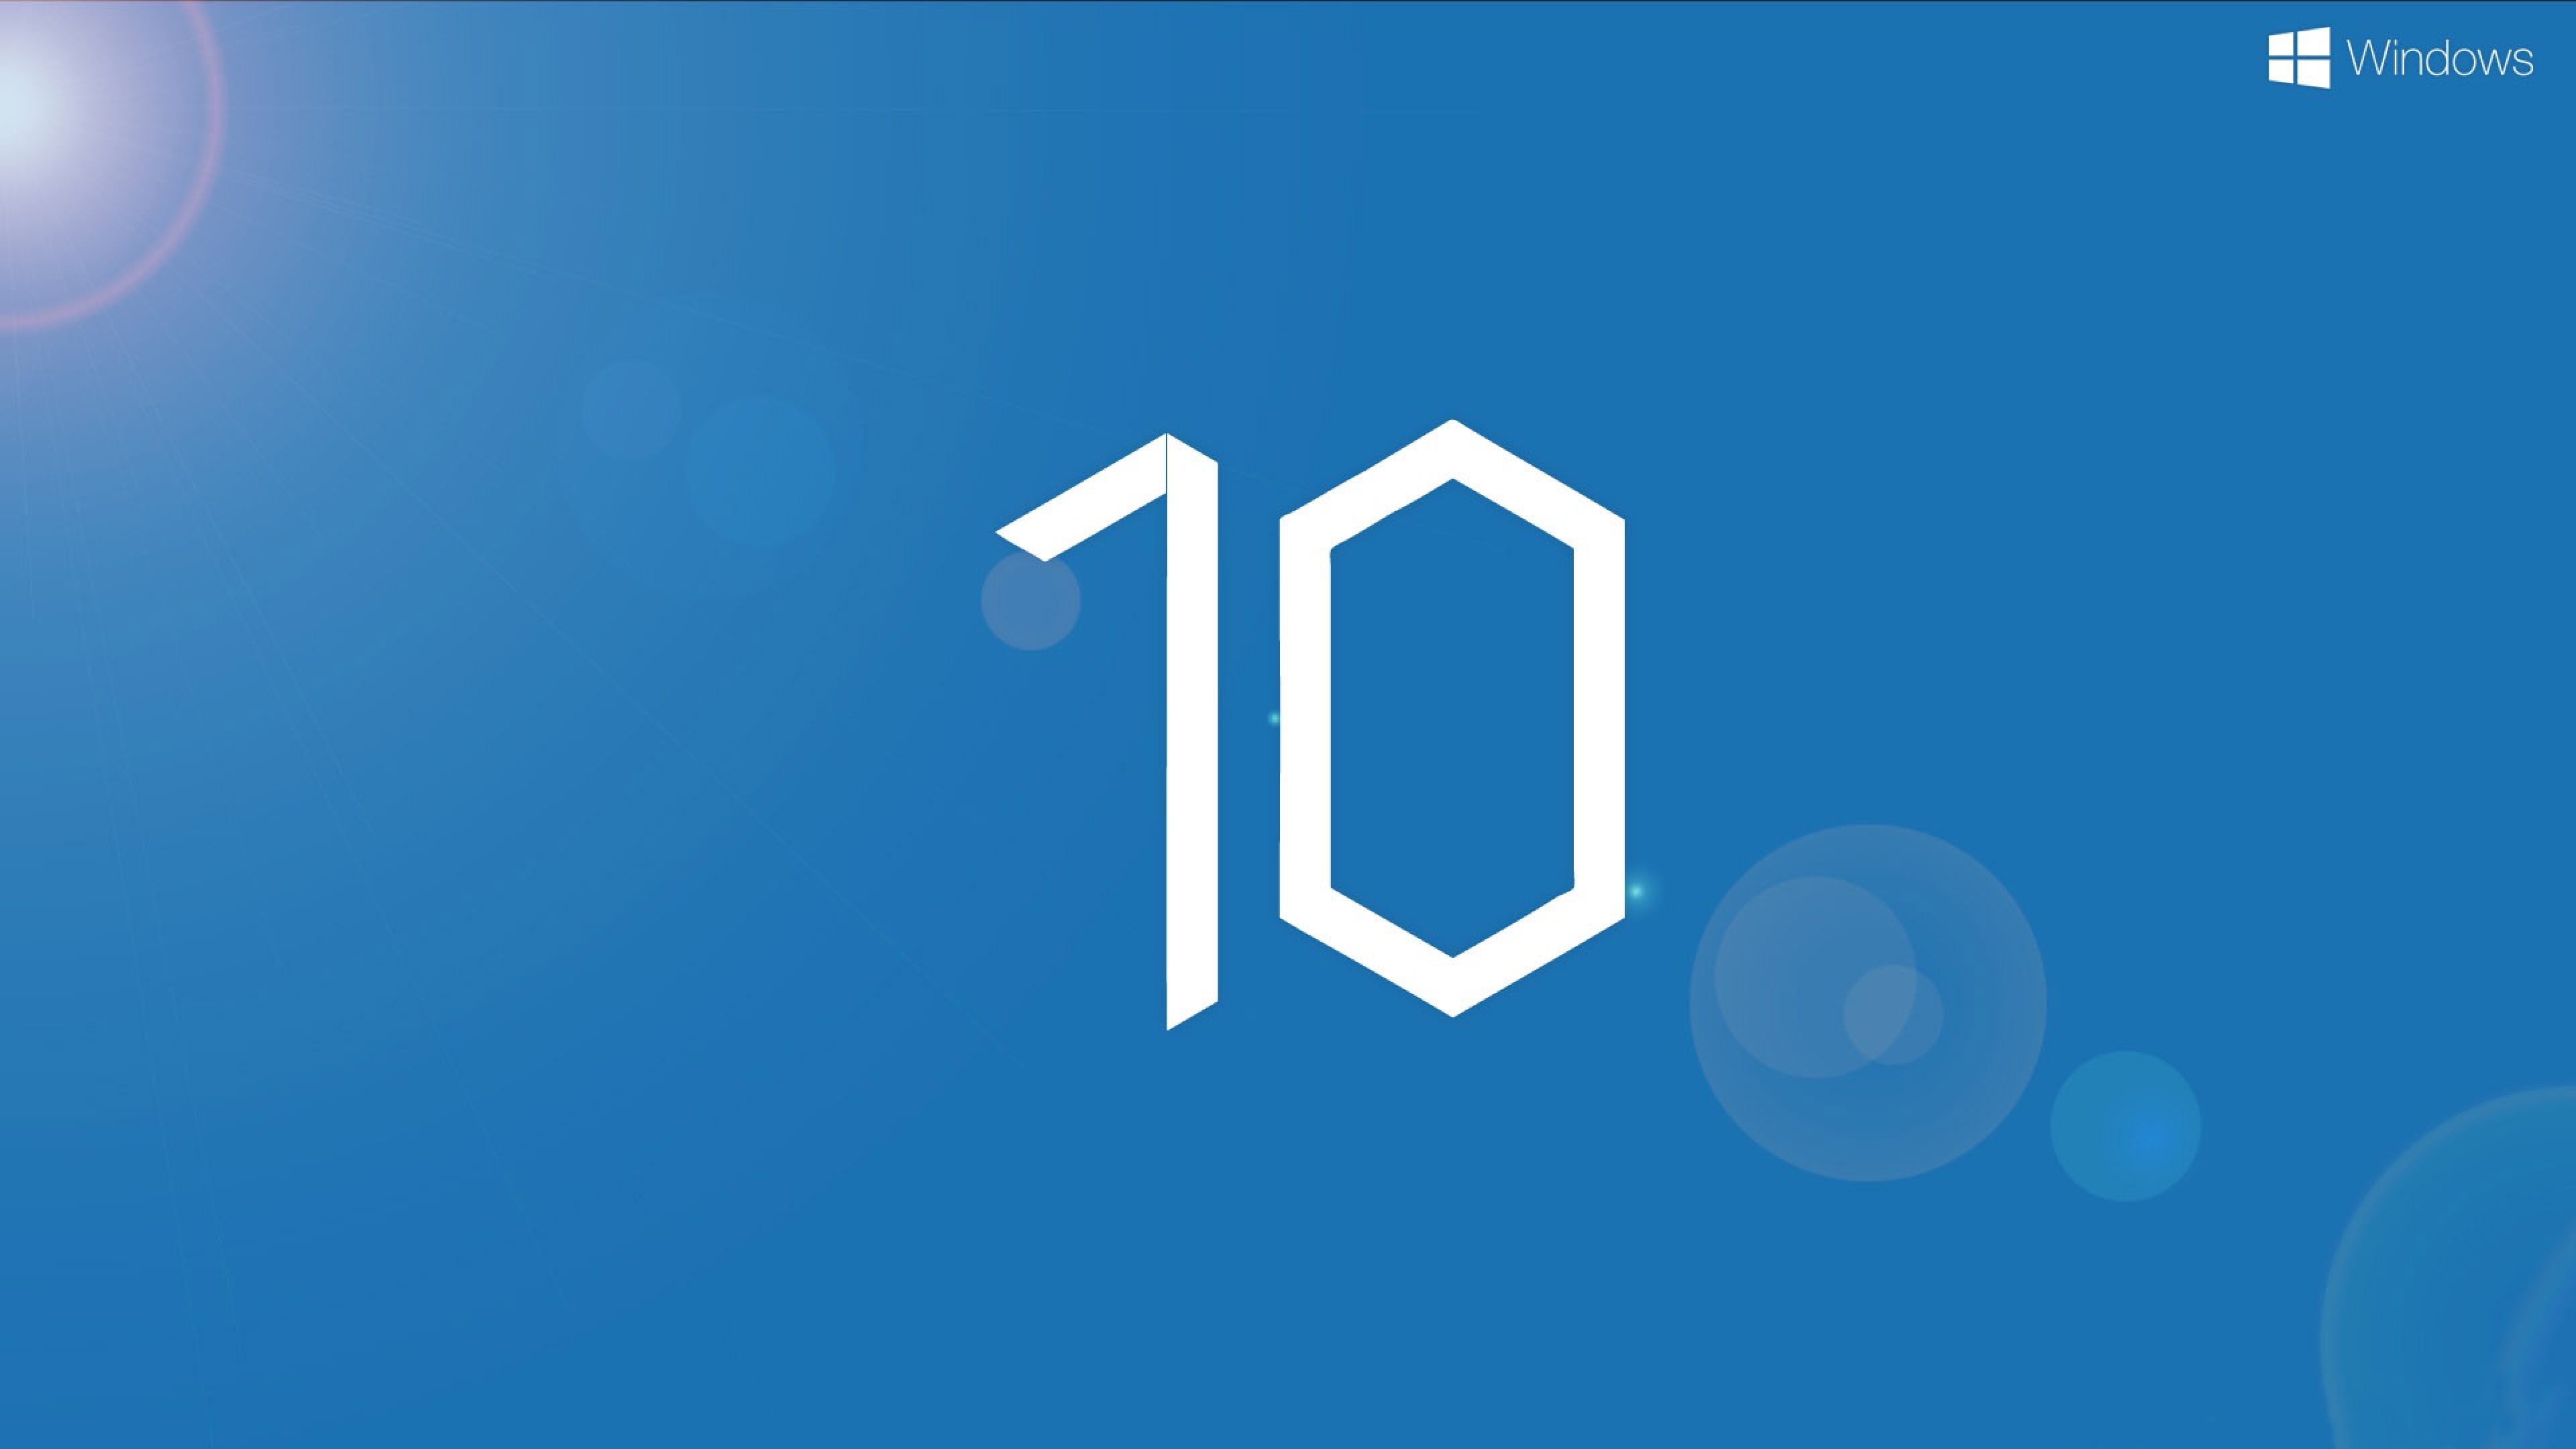 Free download Windows 10 4K Wallpapers Ultra HD Top 15 AxeeTech